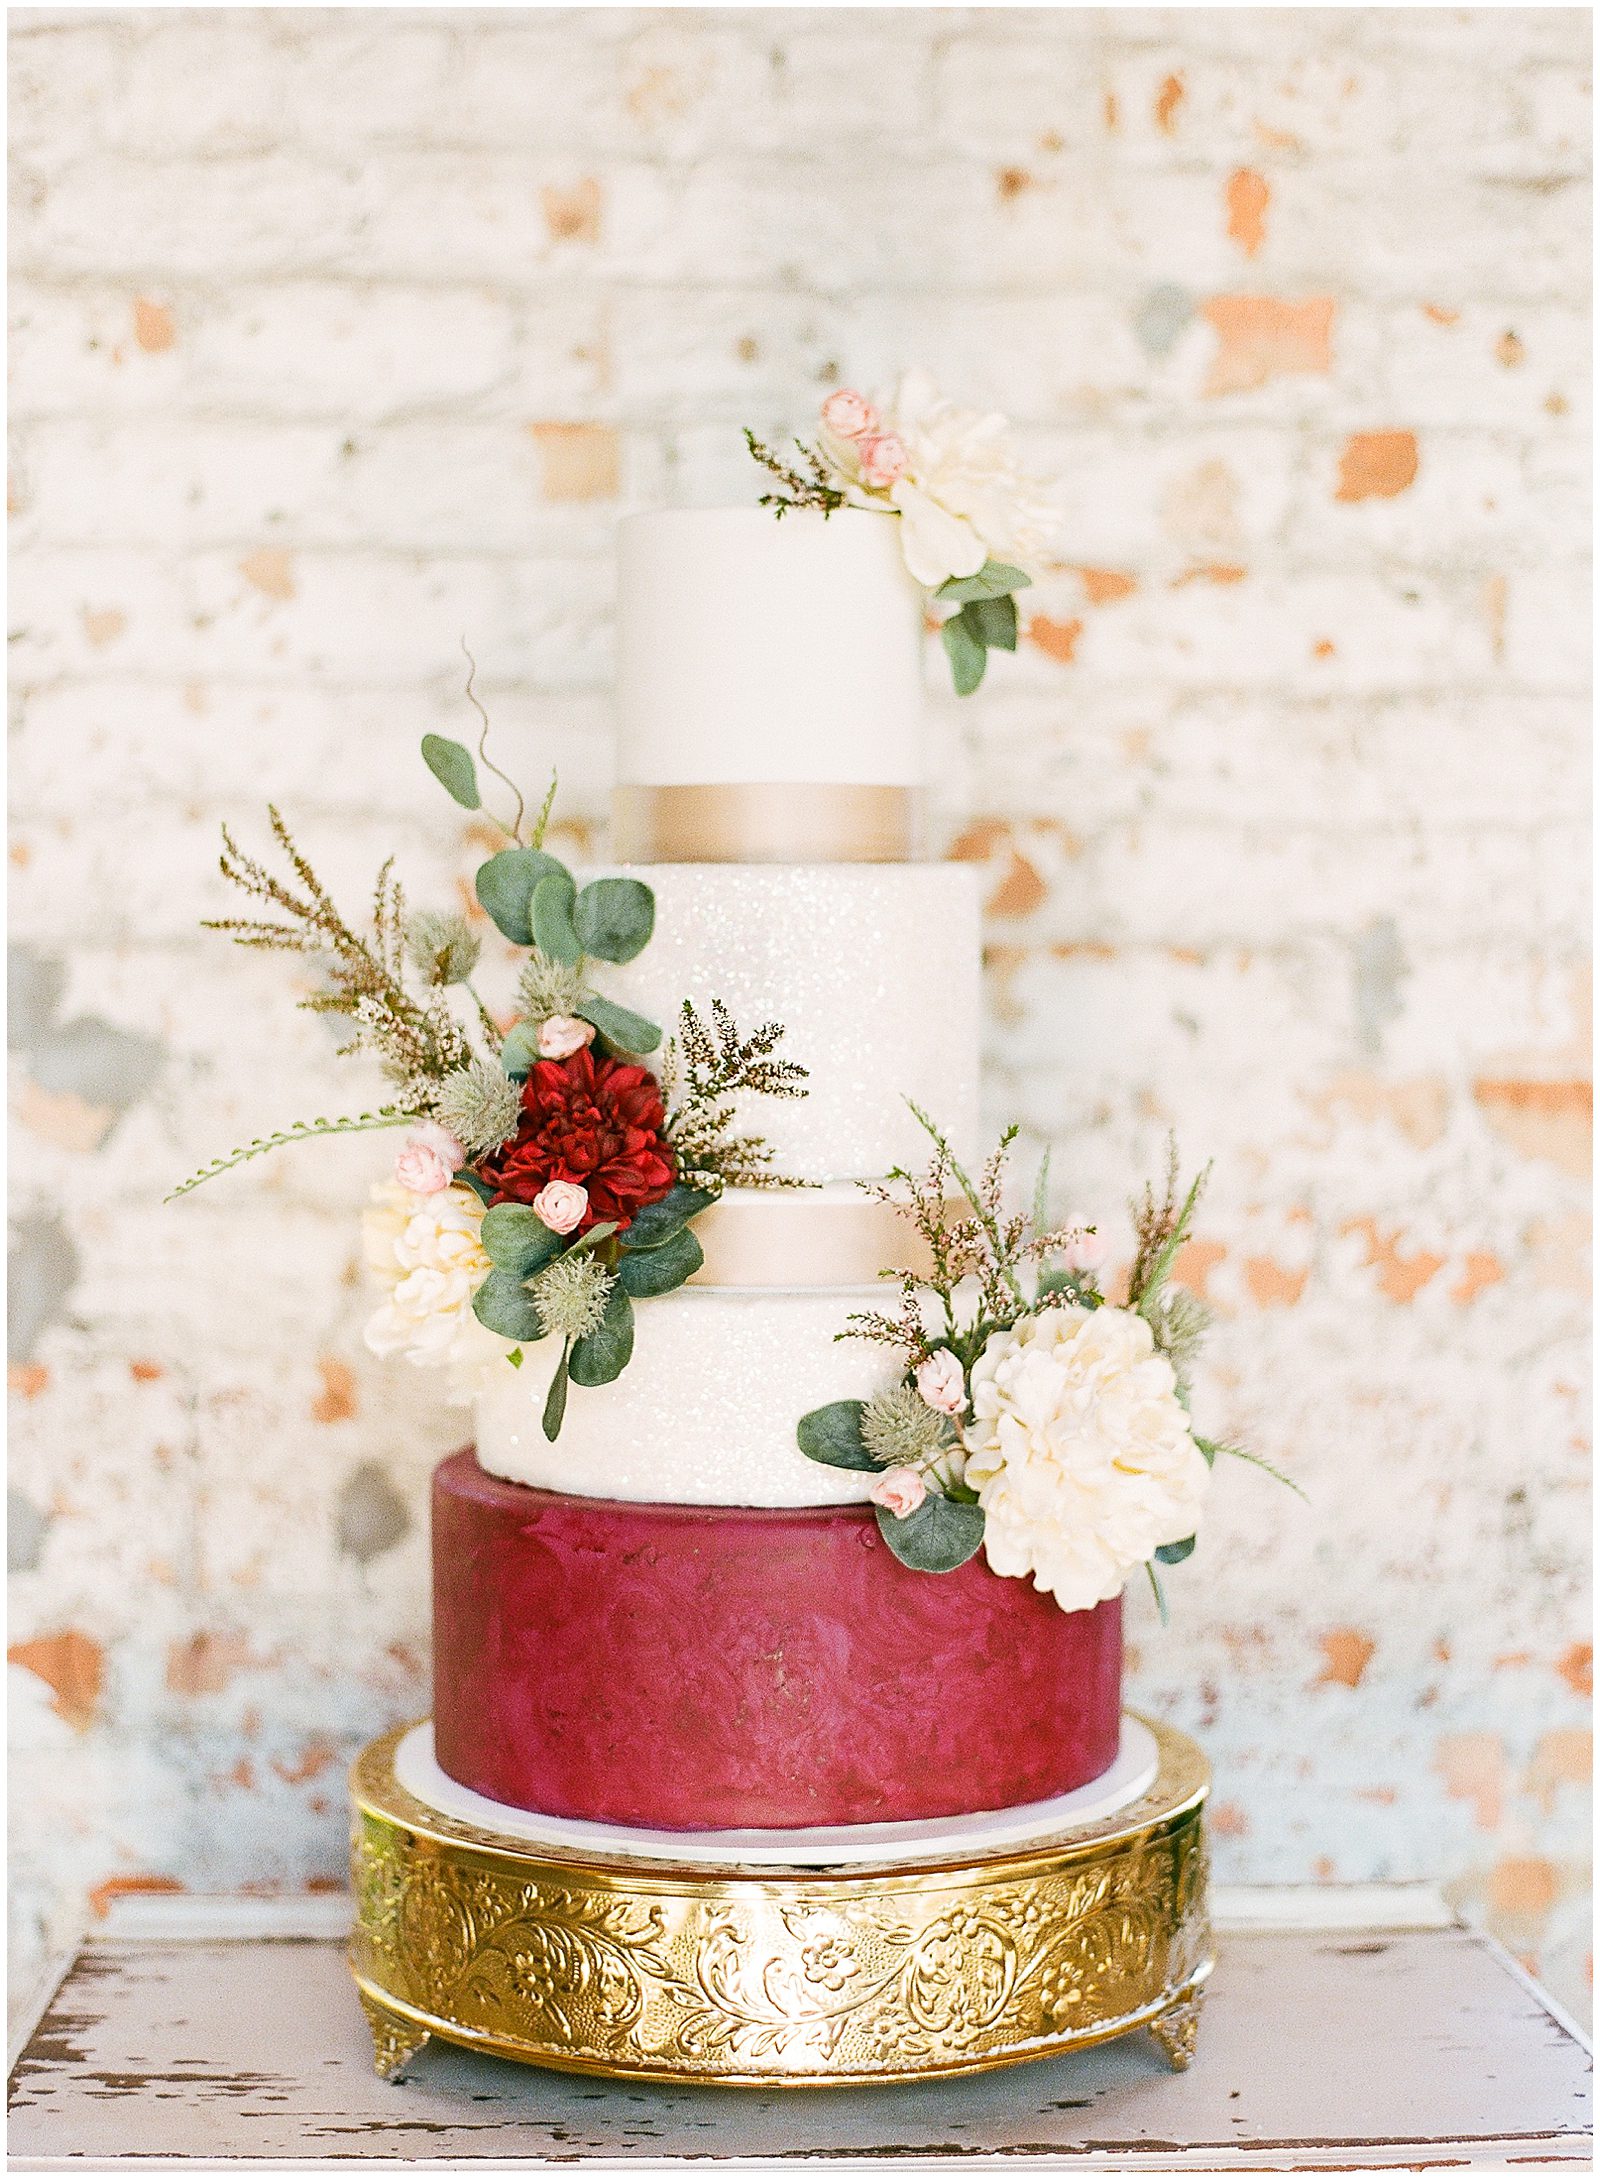 Providence Cotton Mill Wedding Cake Photo